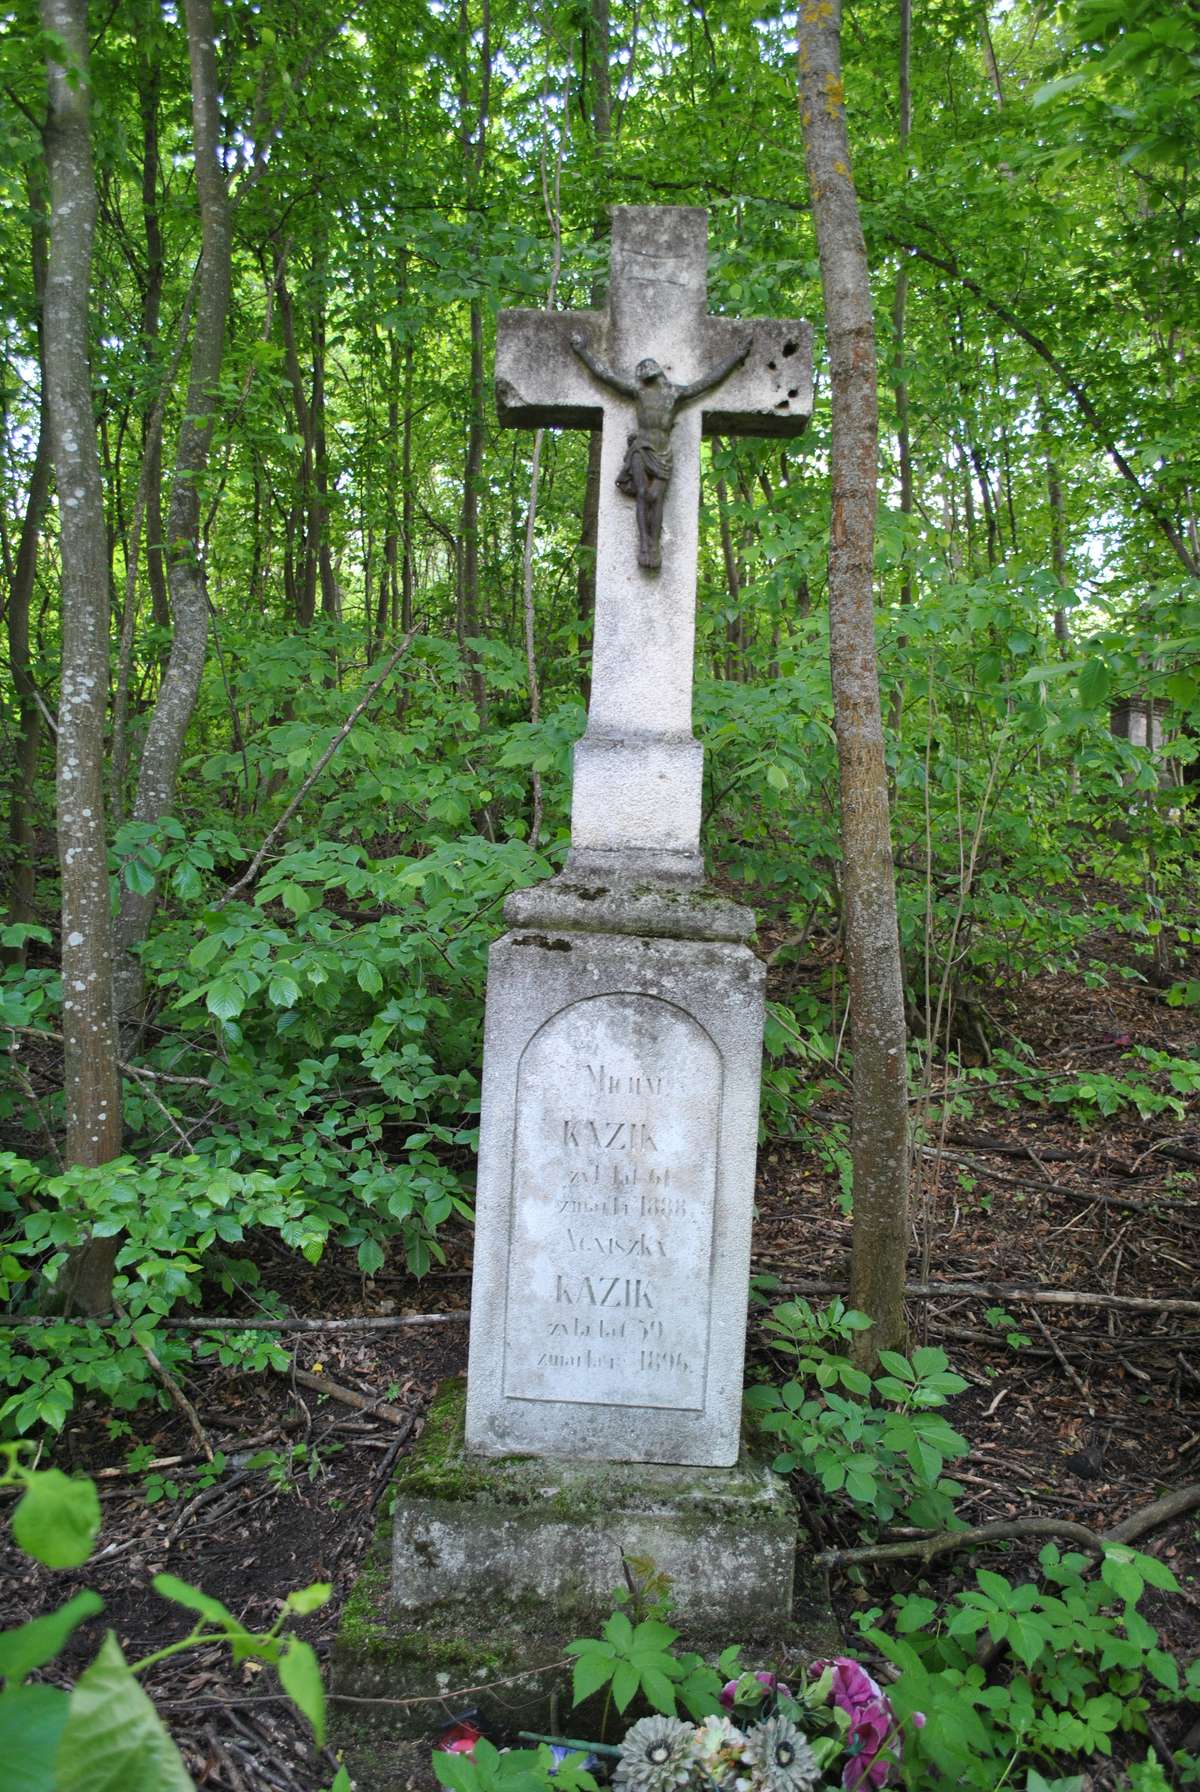 Tombstone of Agnieszka and Michal Kazik. Cemetery in Kokutkowce